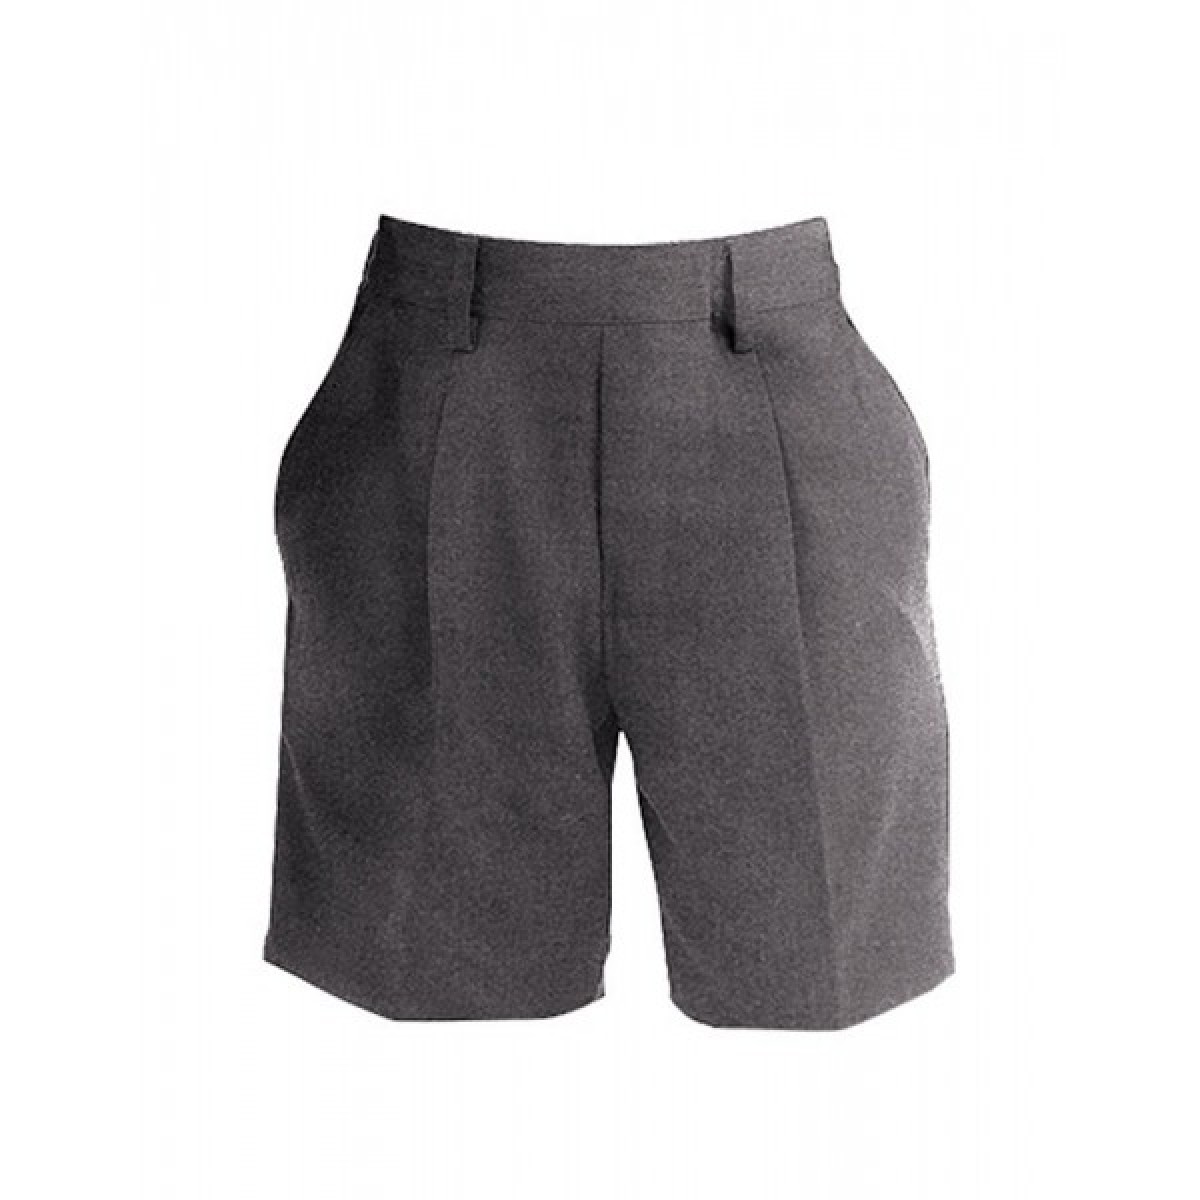 Boys Grey Shorts - 20" waist (Age 3)